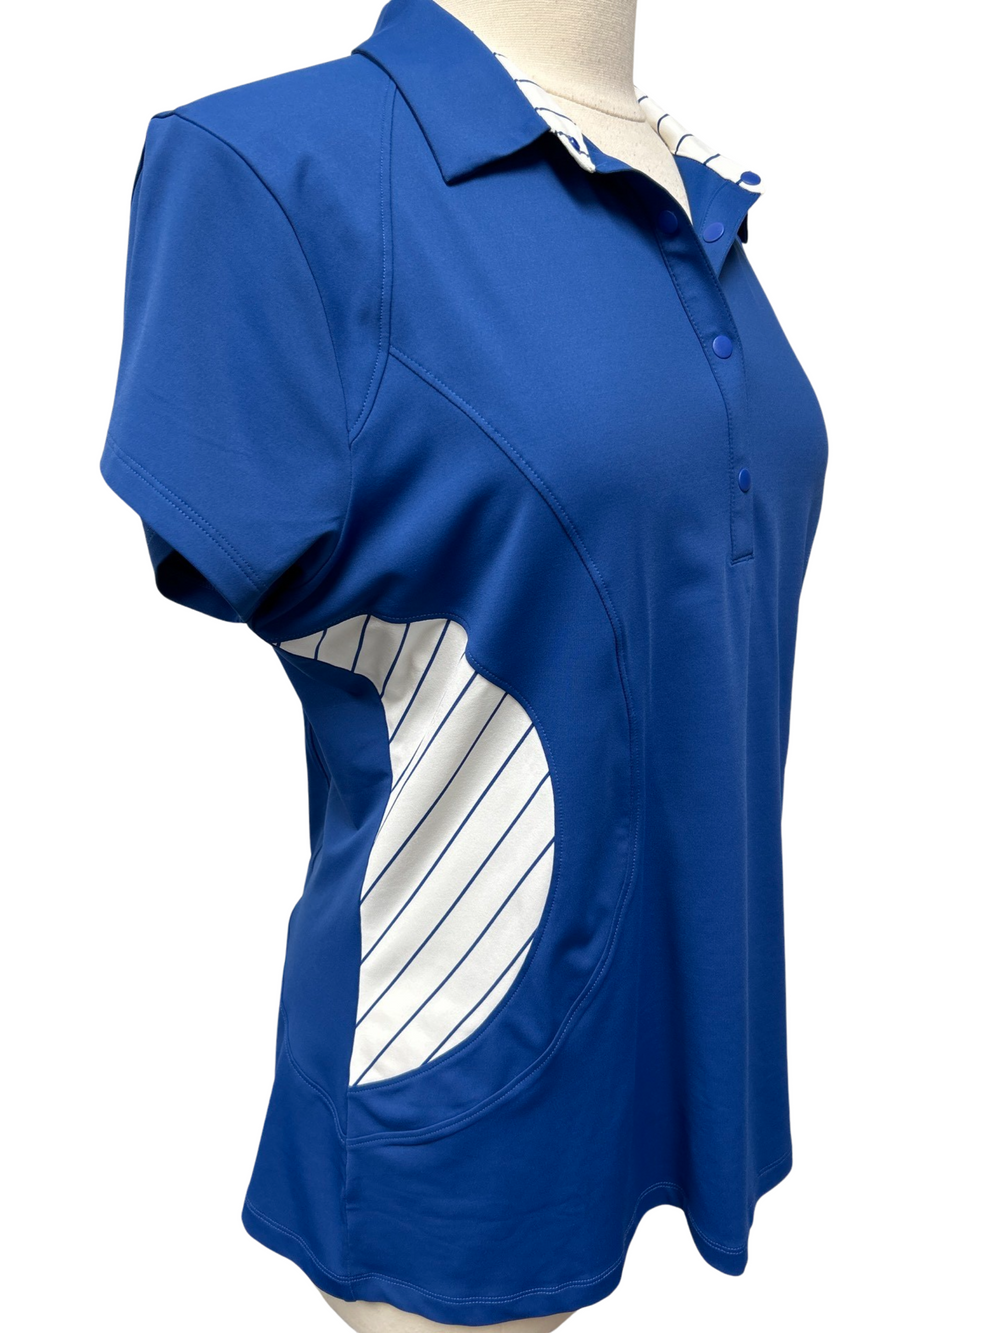 Annika Short Sleeve Top - Blue/White - Size X-Large - Skorzie